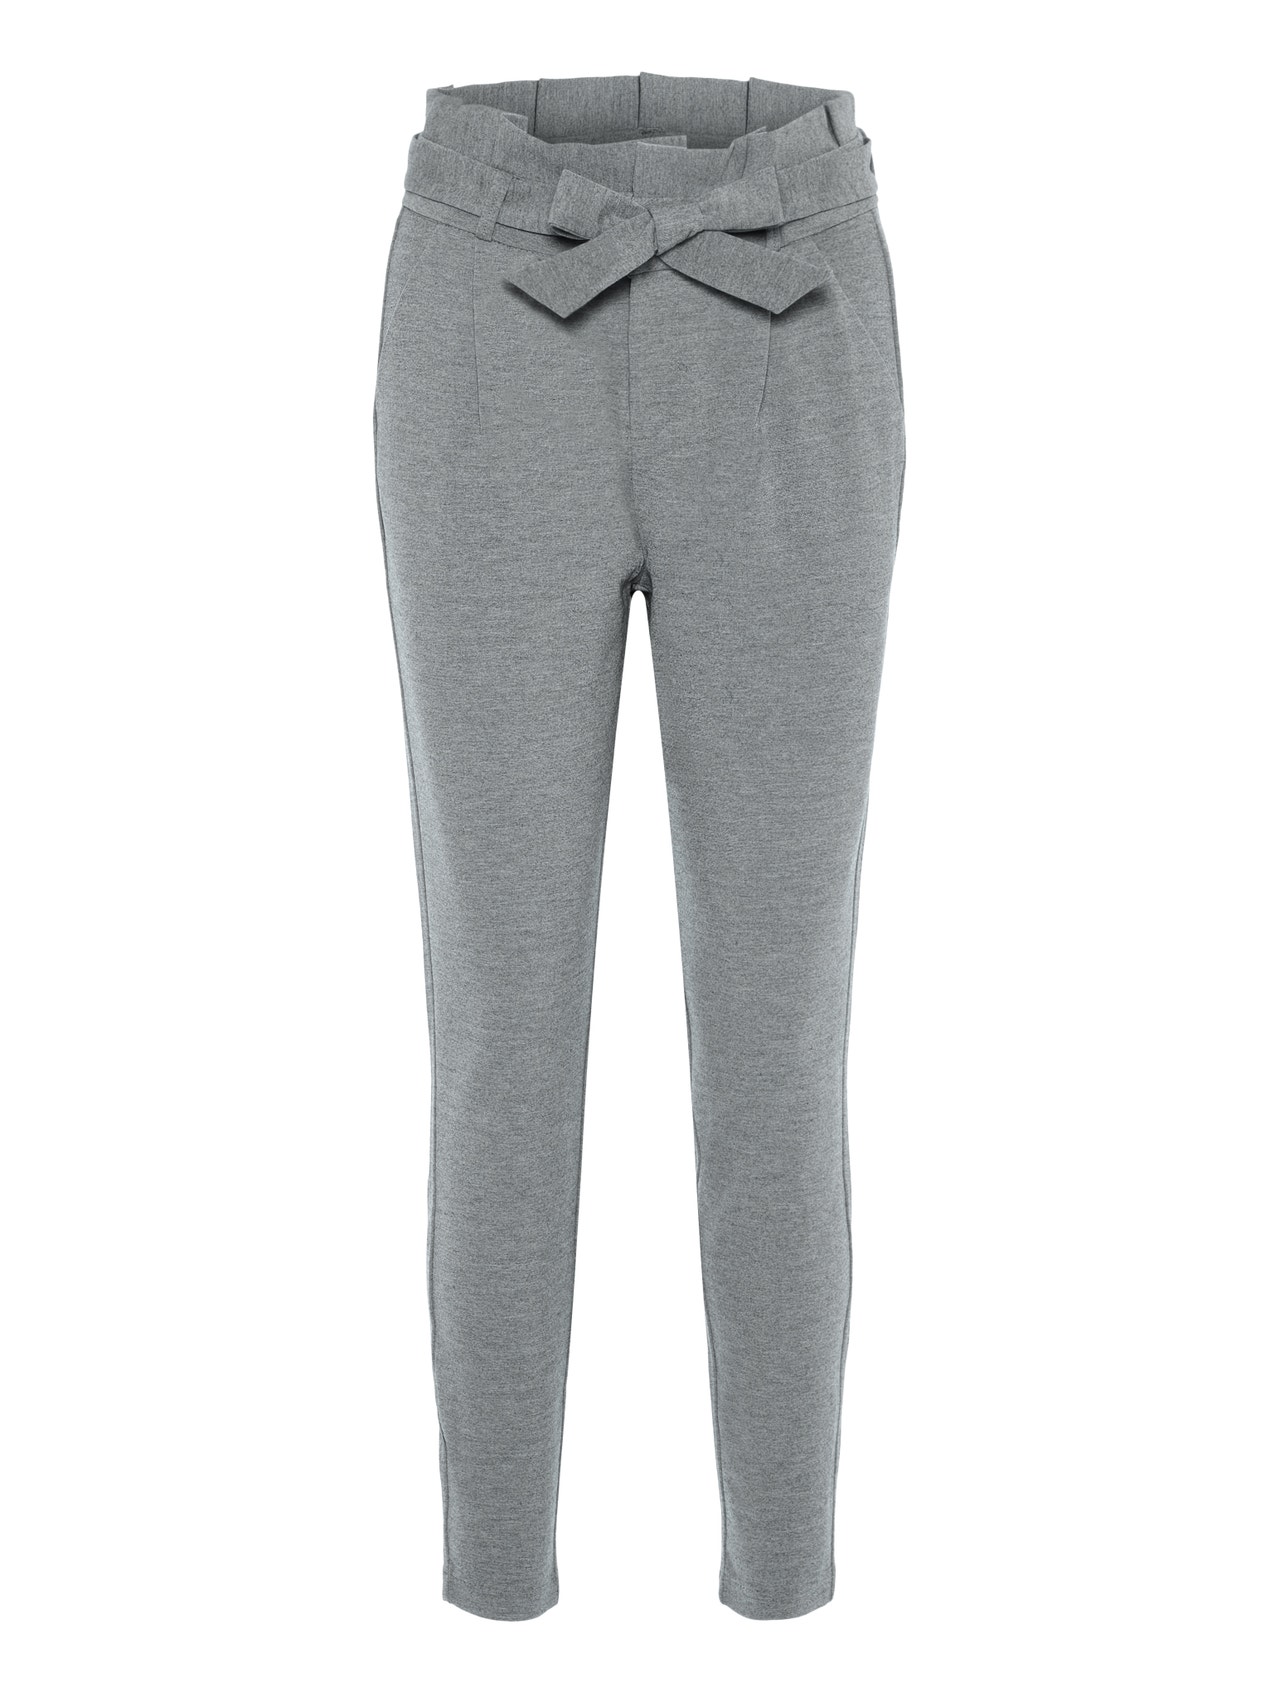 | VMEVA Vero High rise Trousers | Grey Medium Moda®